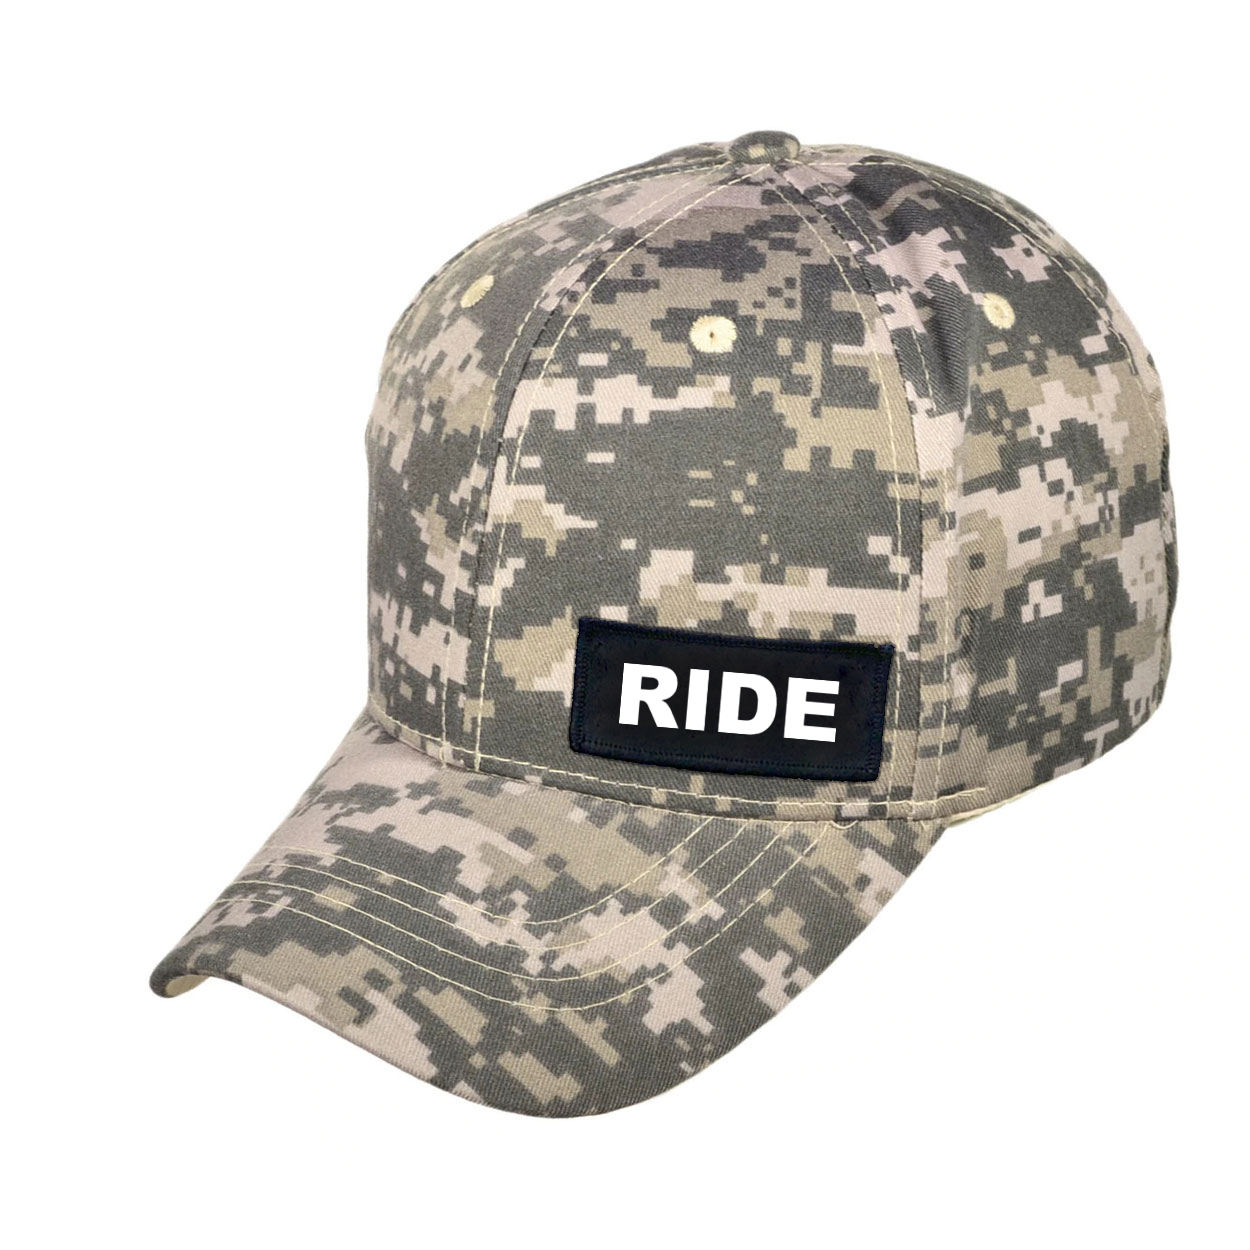 Ride Brand Logo Night Out Woven Patch Velcro Baseball Cap Hat Digital Camo